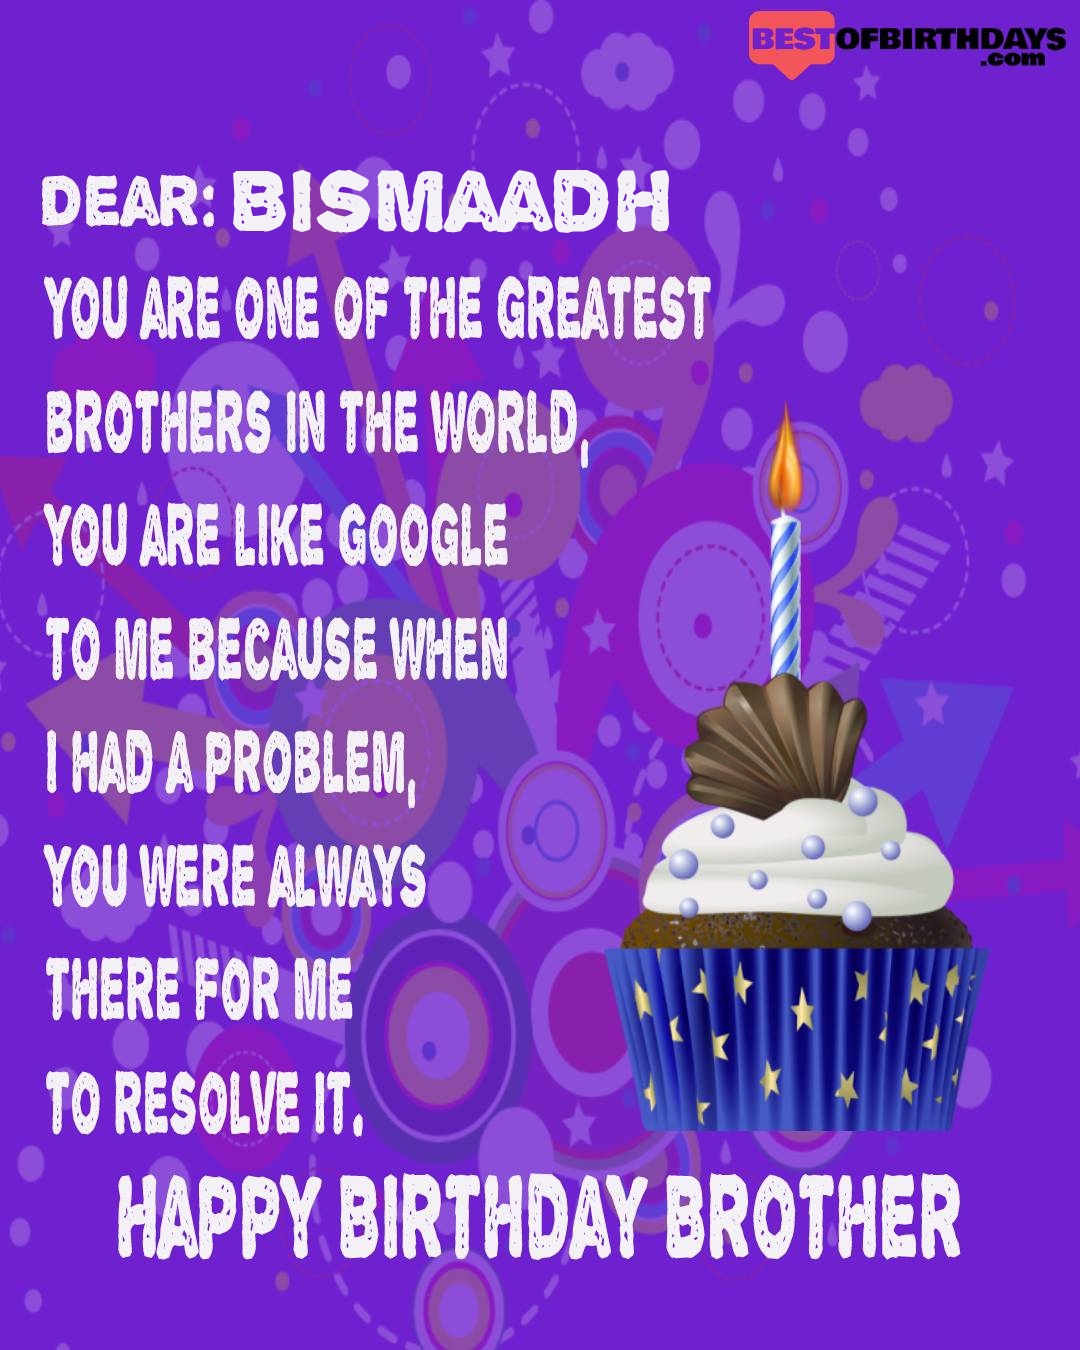 Happy birthday bismaadh bhai brother bro